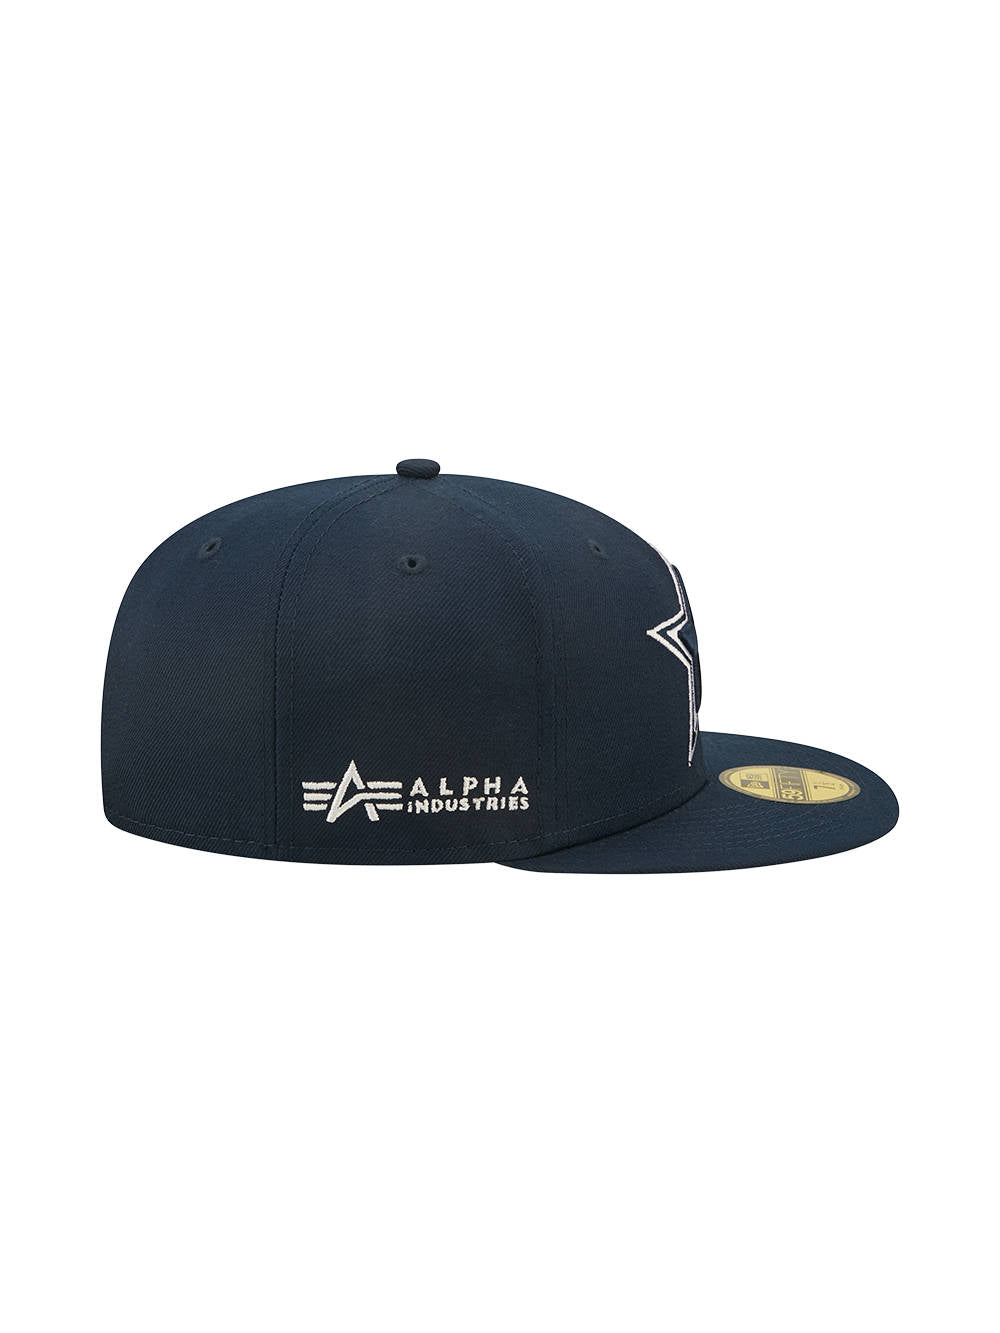 DALLAS COWBOYS X ALPHA X NEW ERA 5950 FITTED CAP ACCESSORY Alpha Industries 